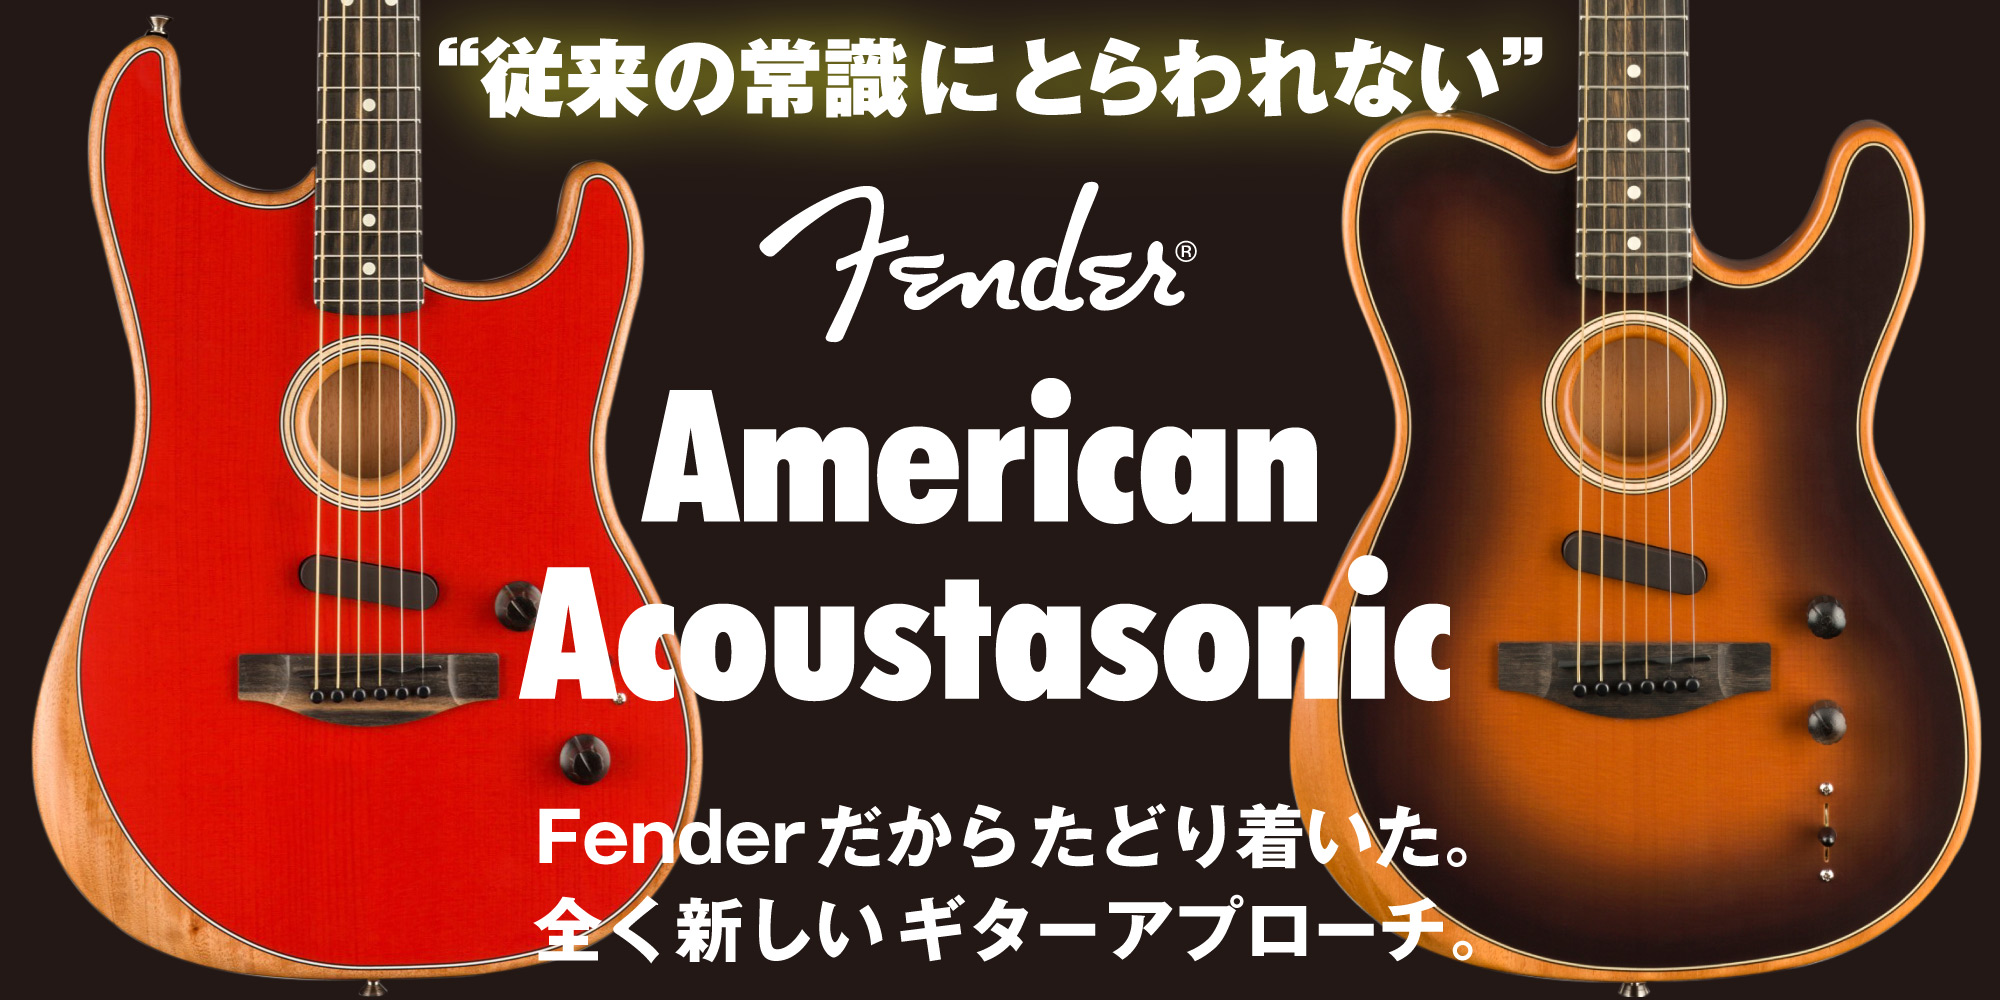 Fender AMERICAN ACOUSTASONIC】